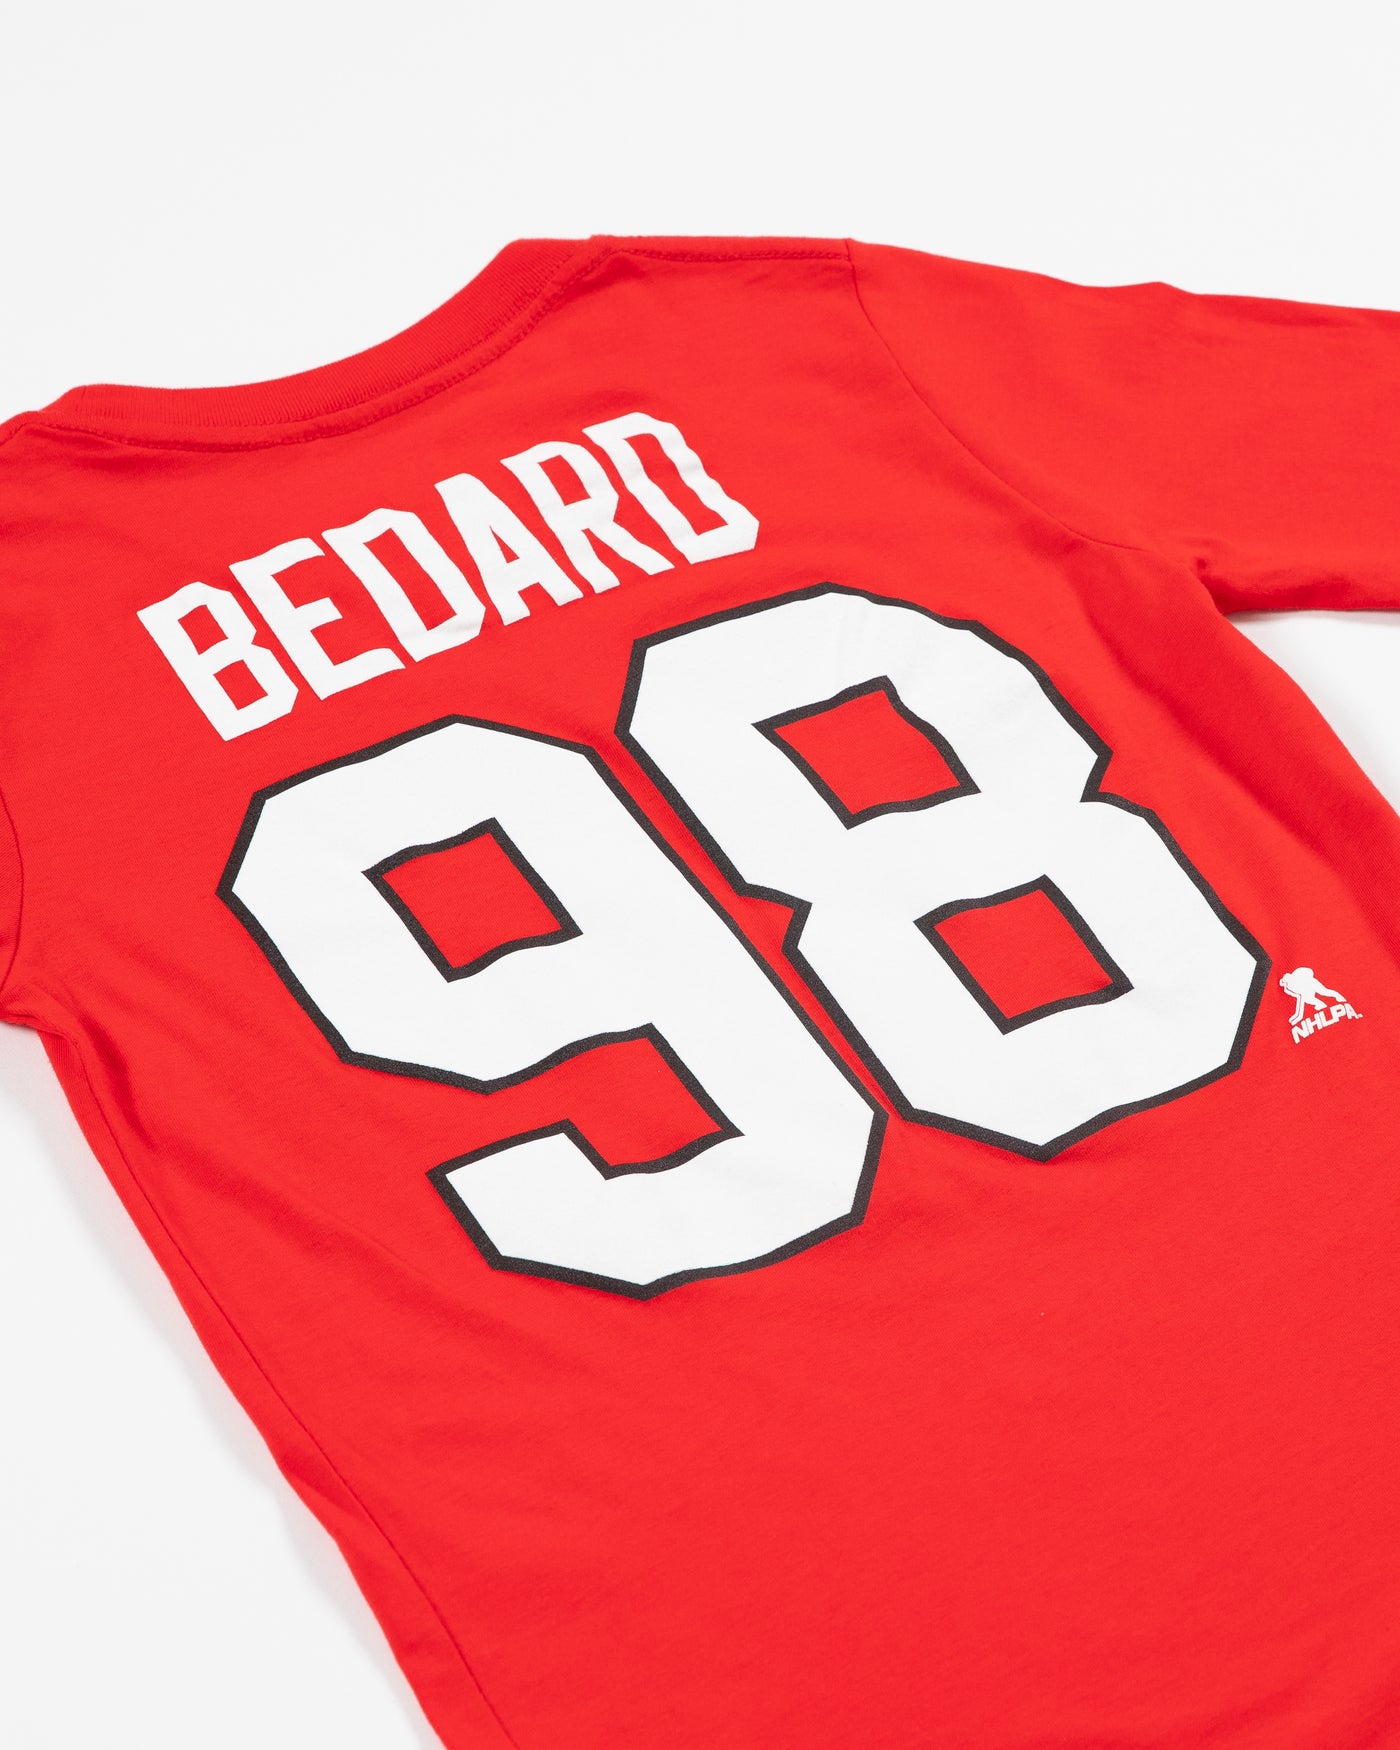 Connor Bedard Chicago Blackhawks Youth Red T-Shirt - Clark Street Sports